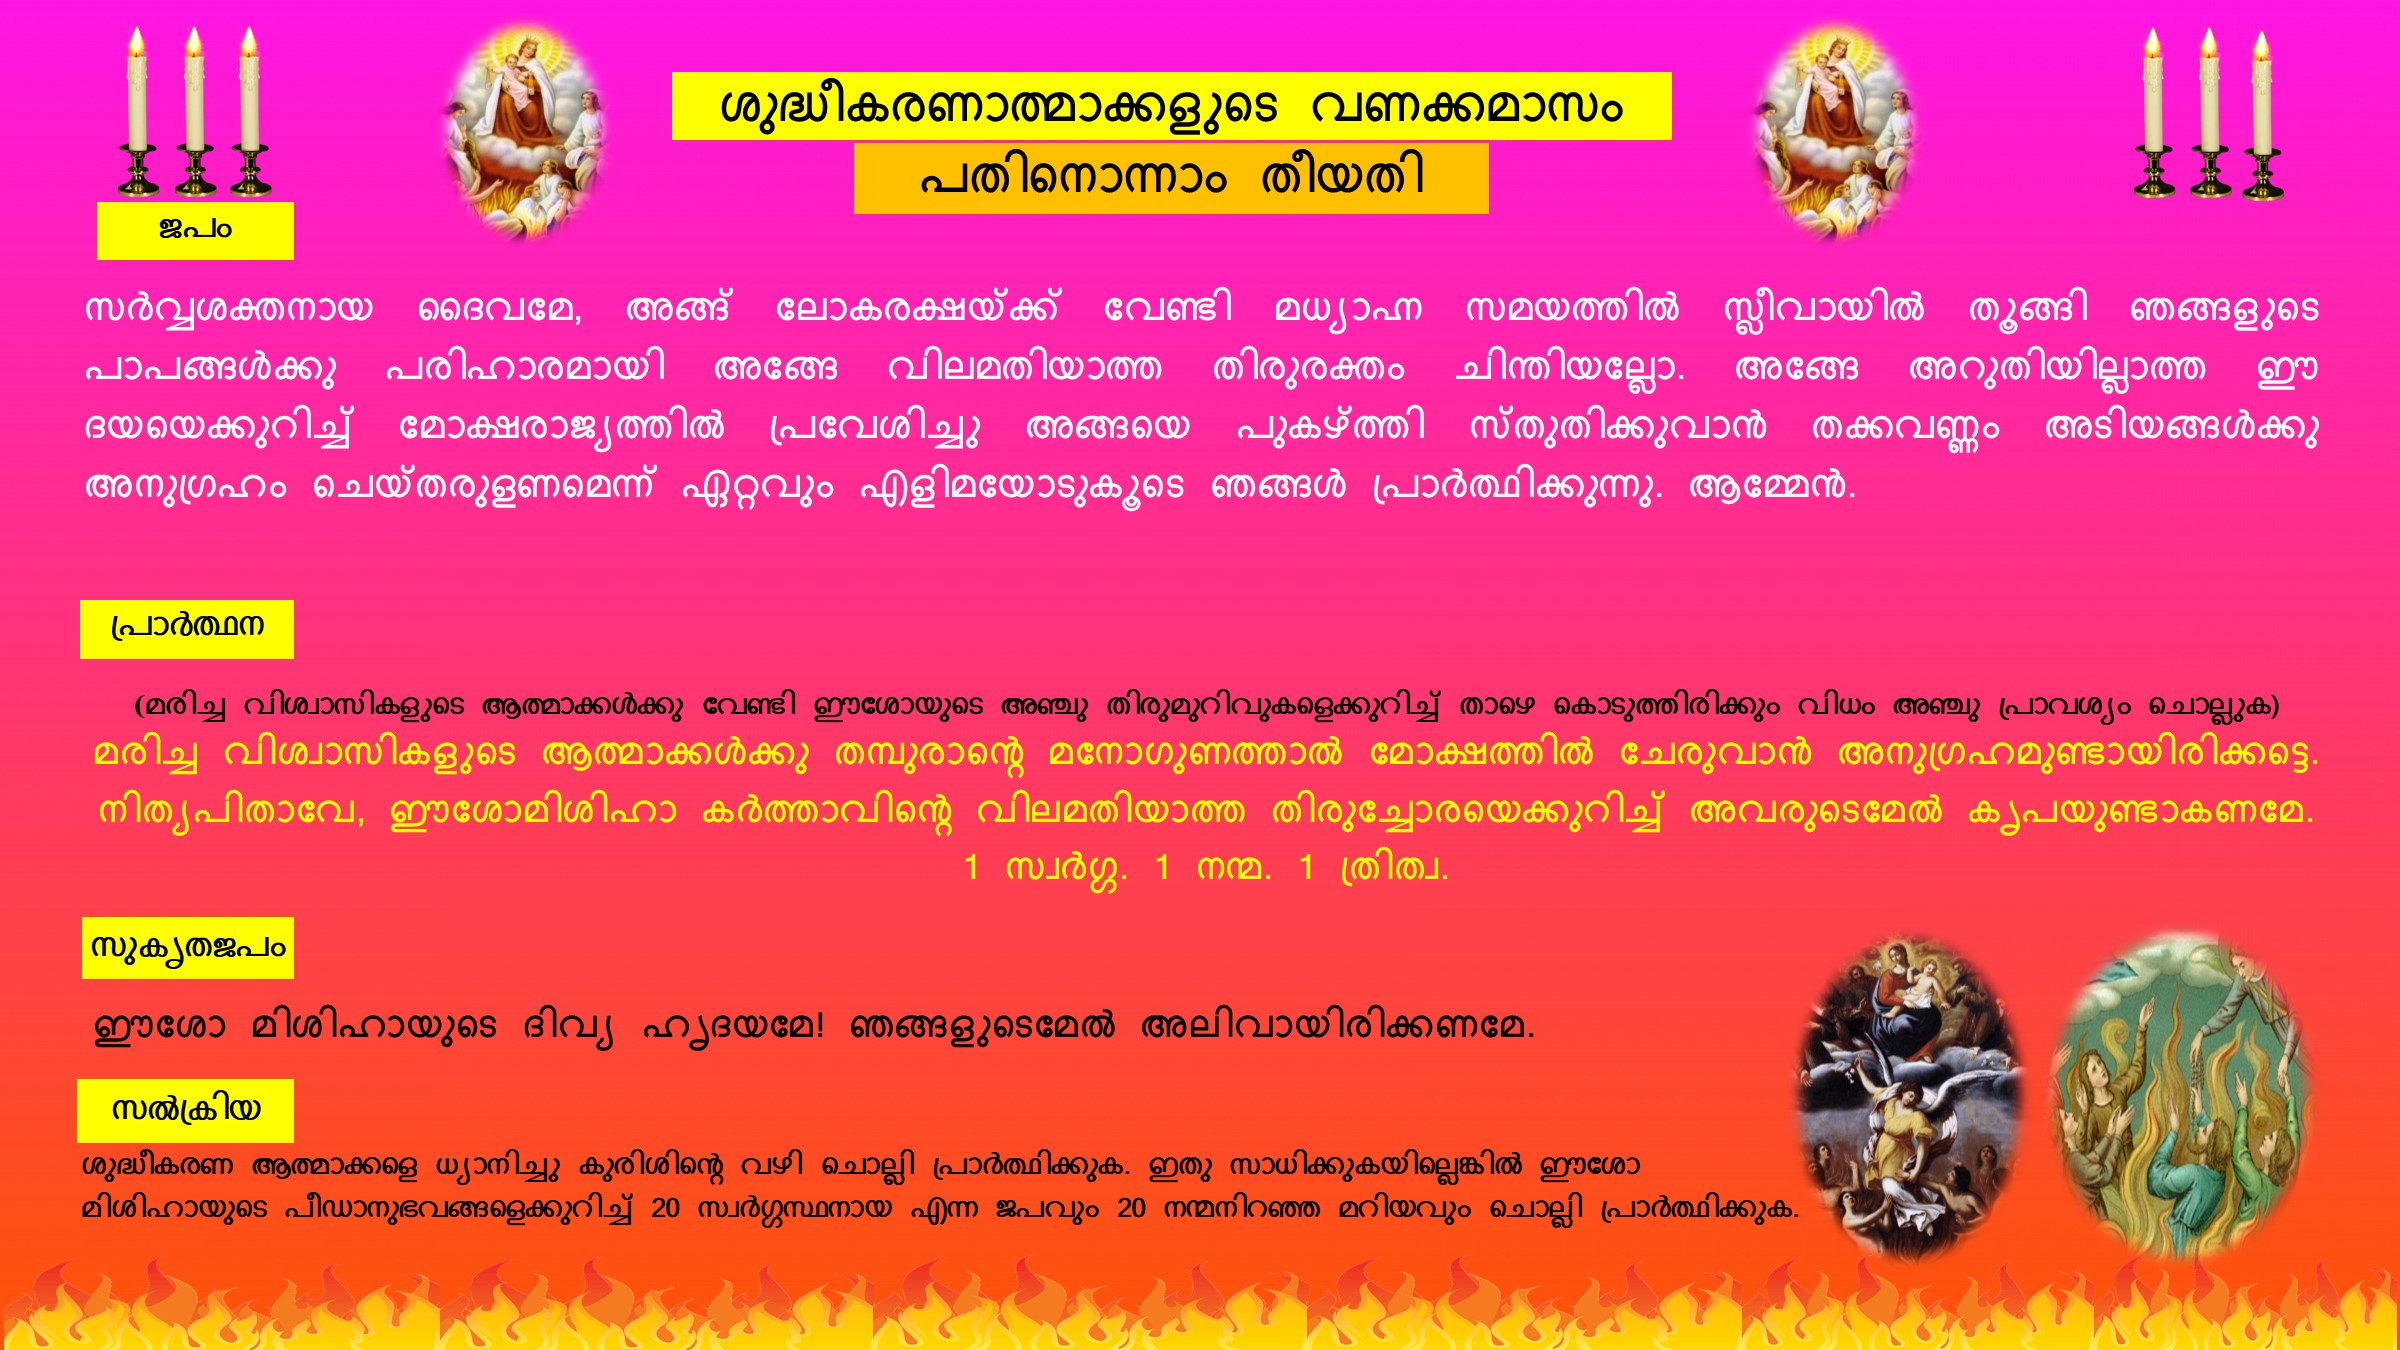 Souls in Purgatory, Vanakkamasam, November 11